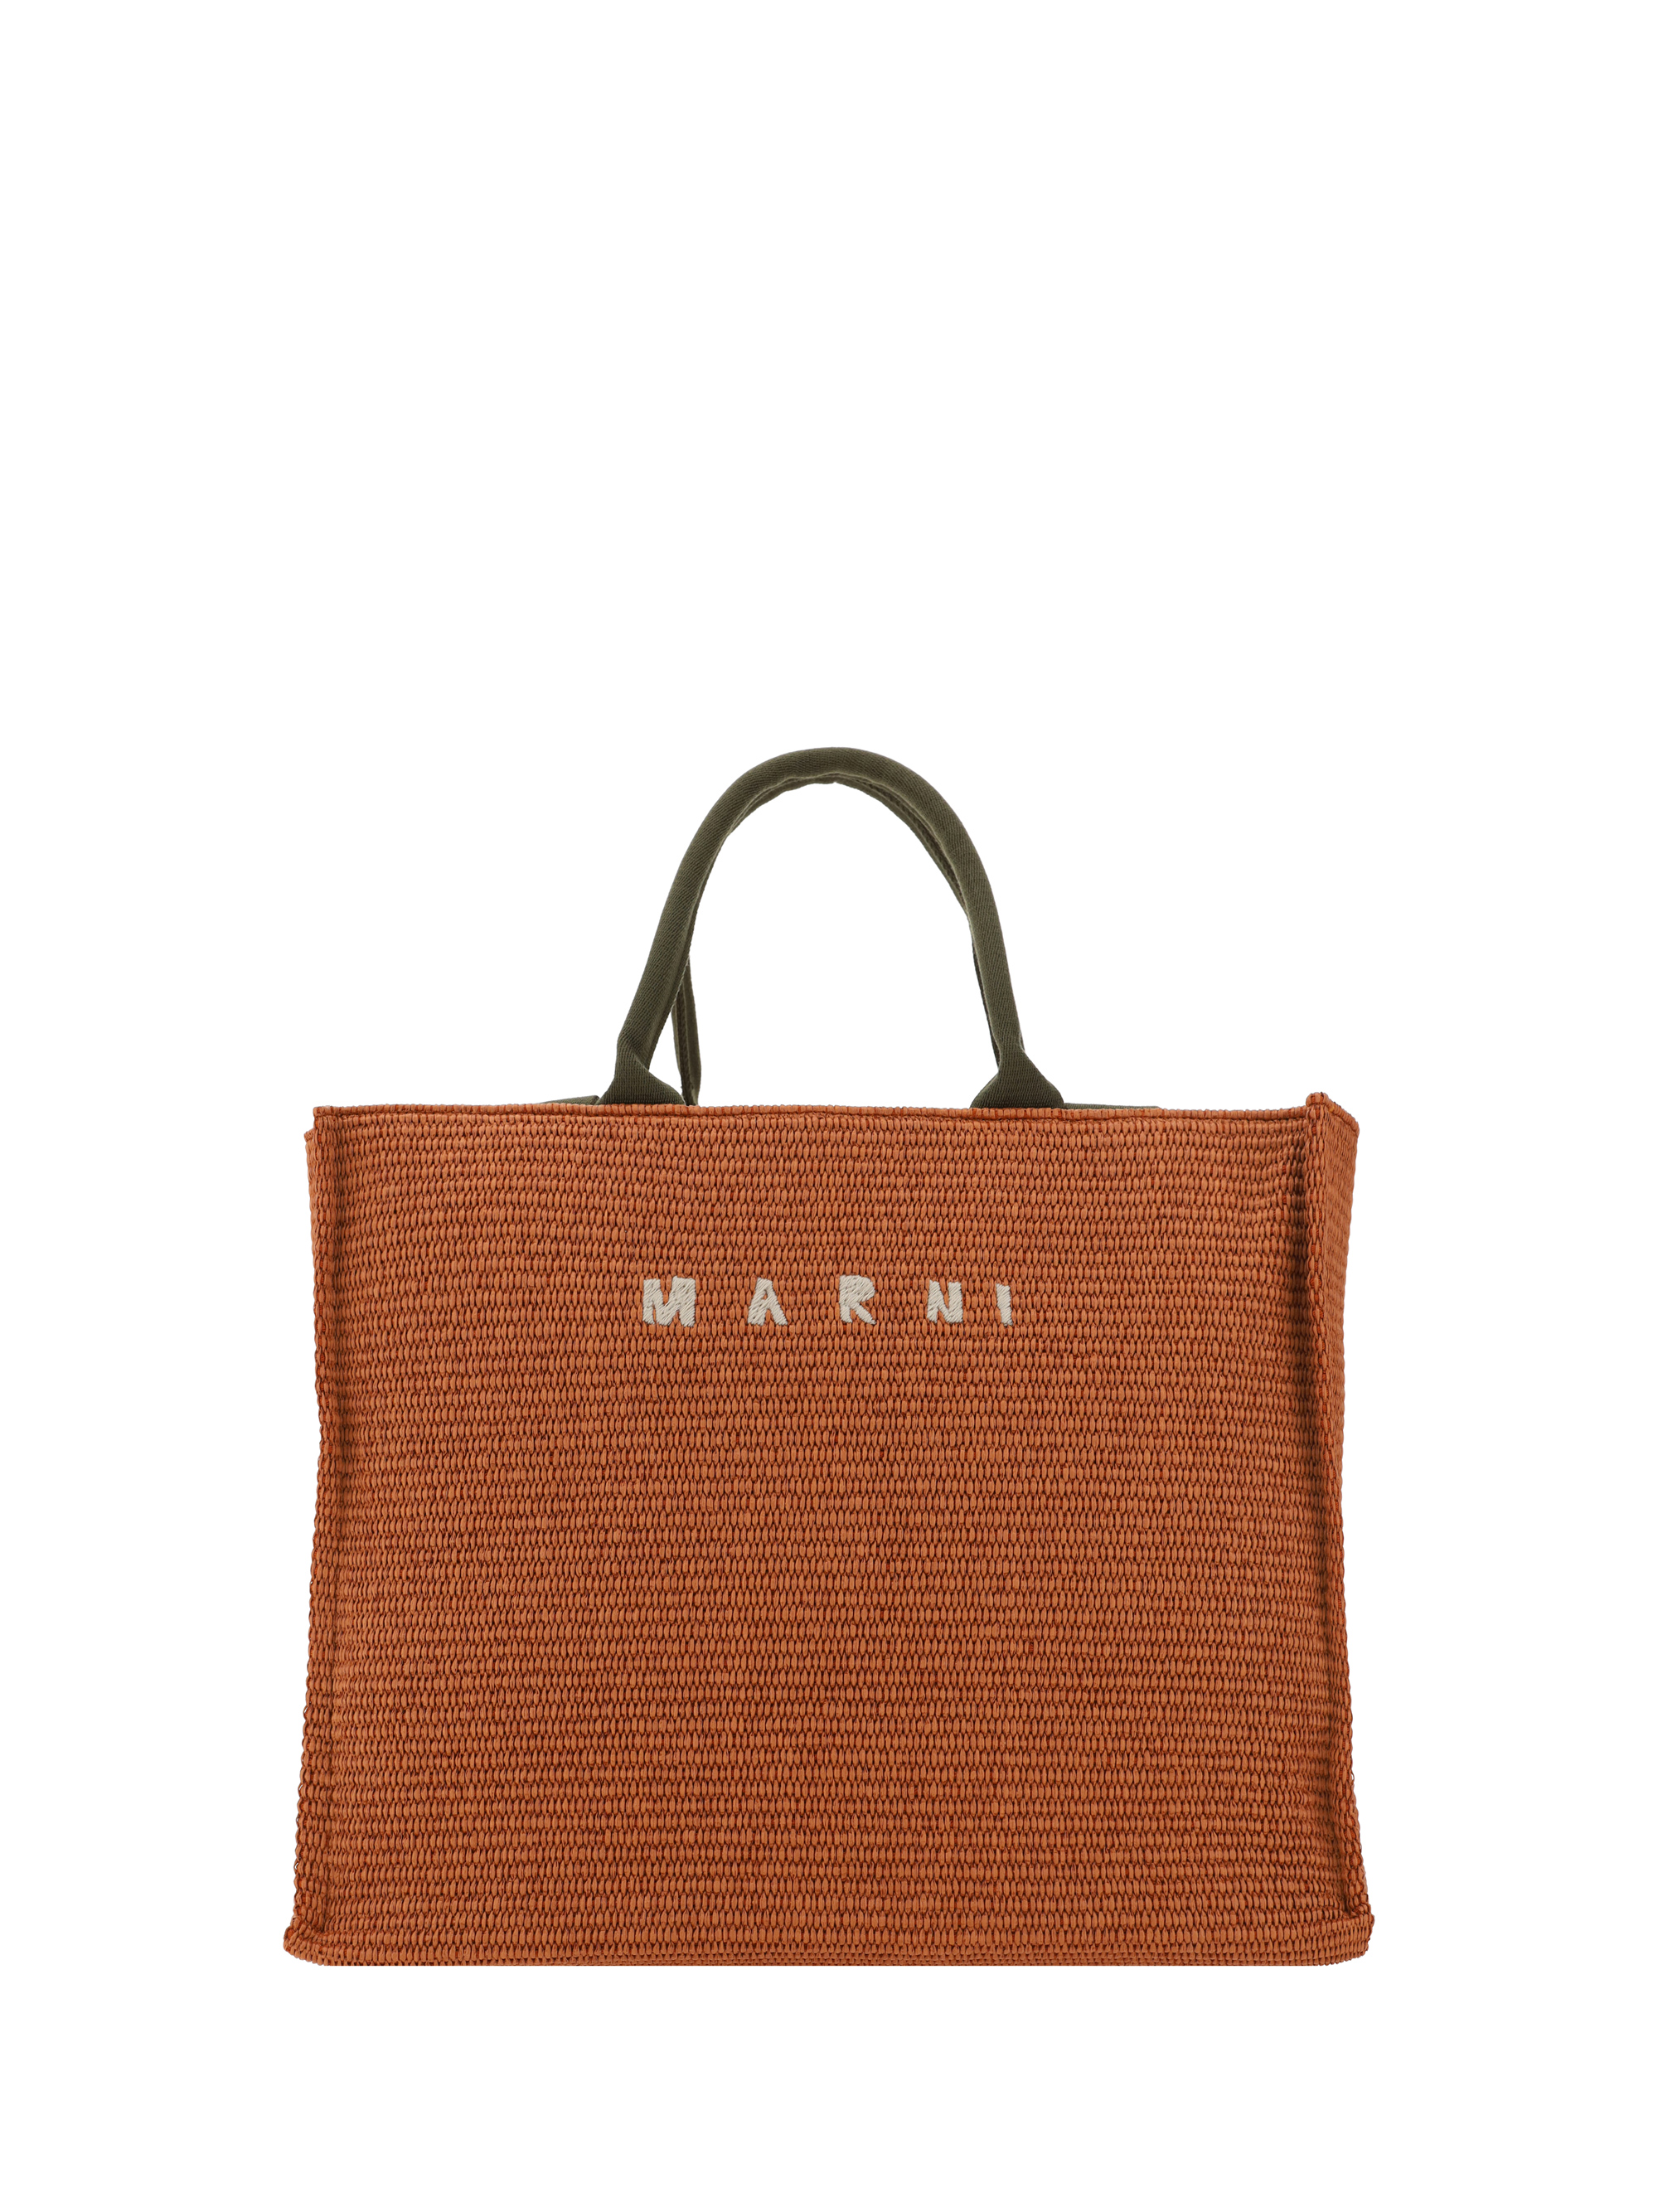 Marni Handbag In Brick/olive